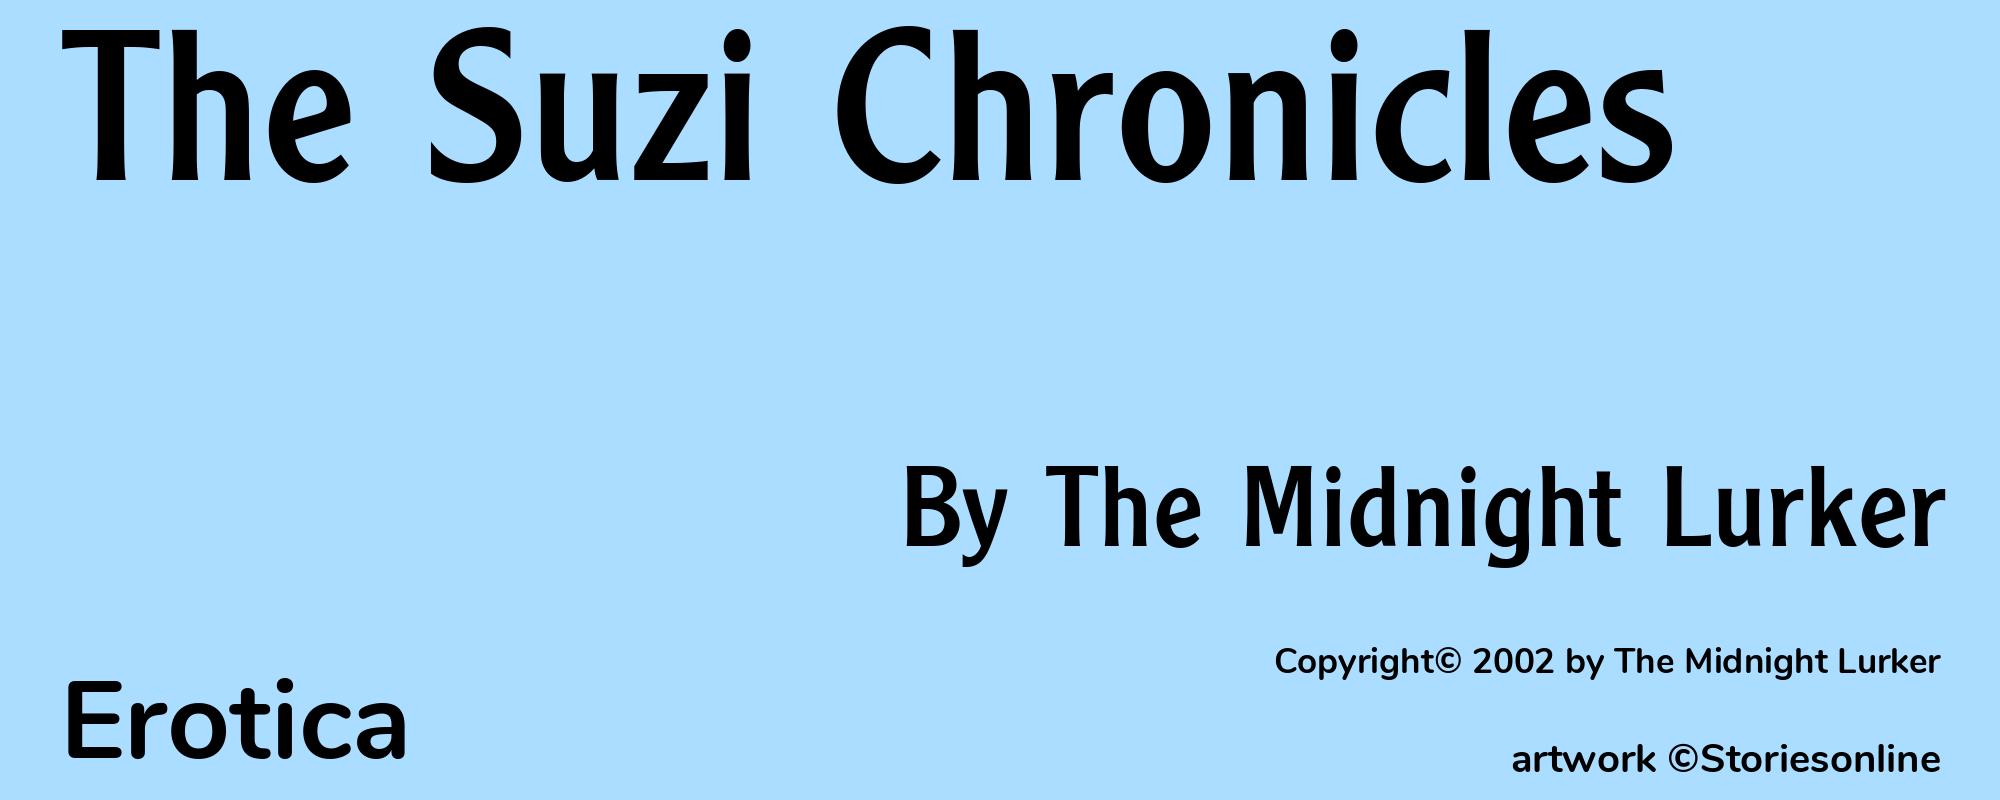 The Suzi Chronicles - Cover